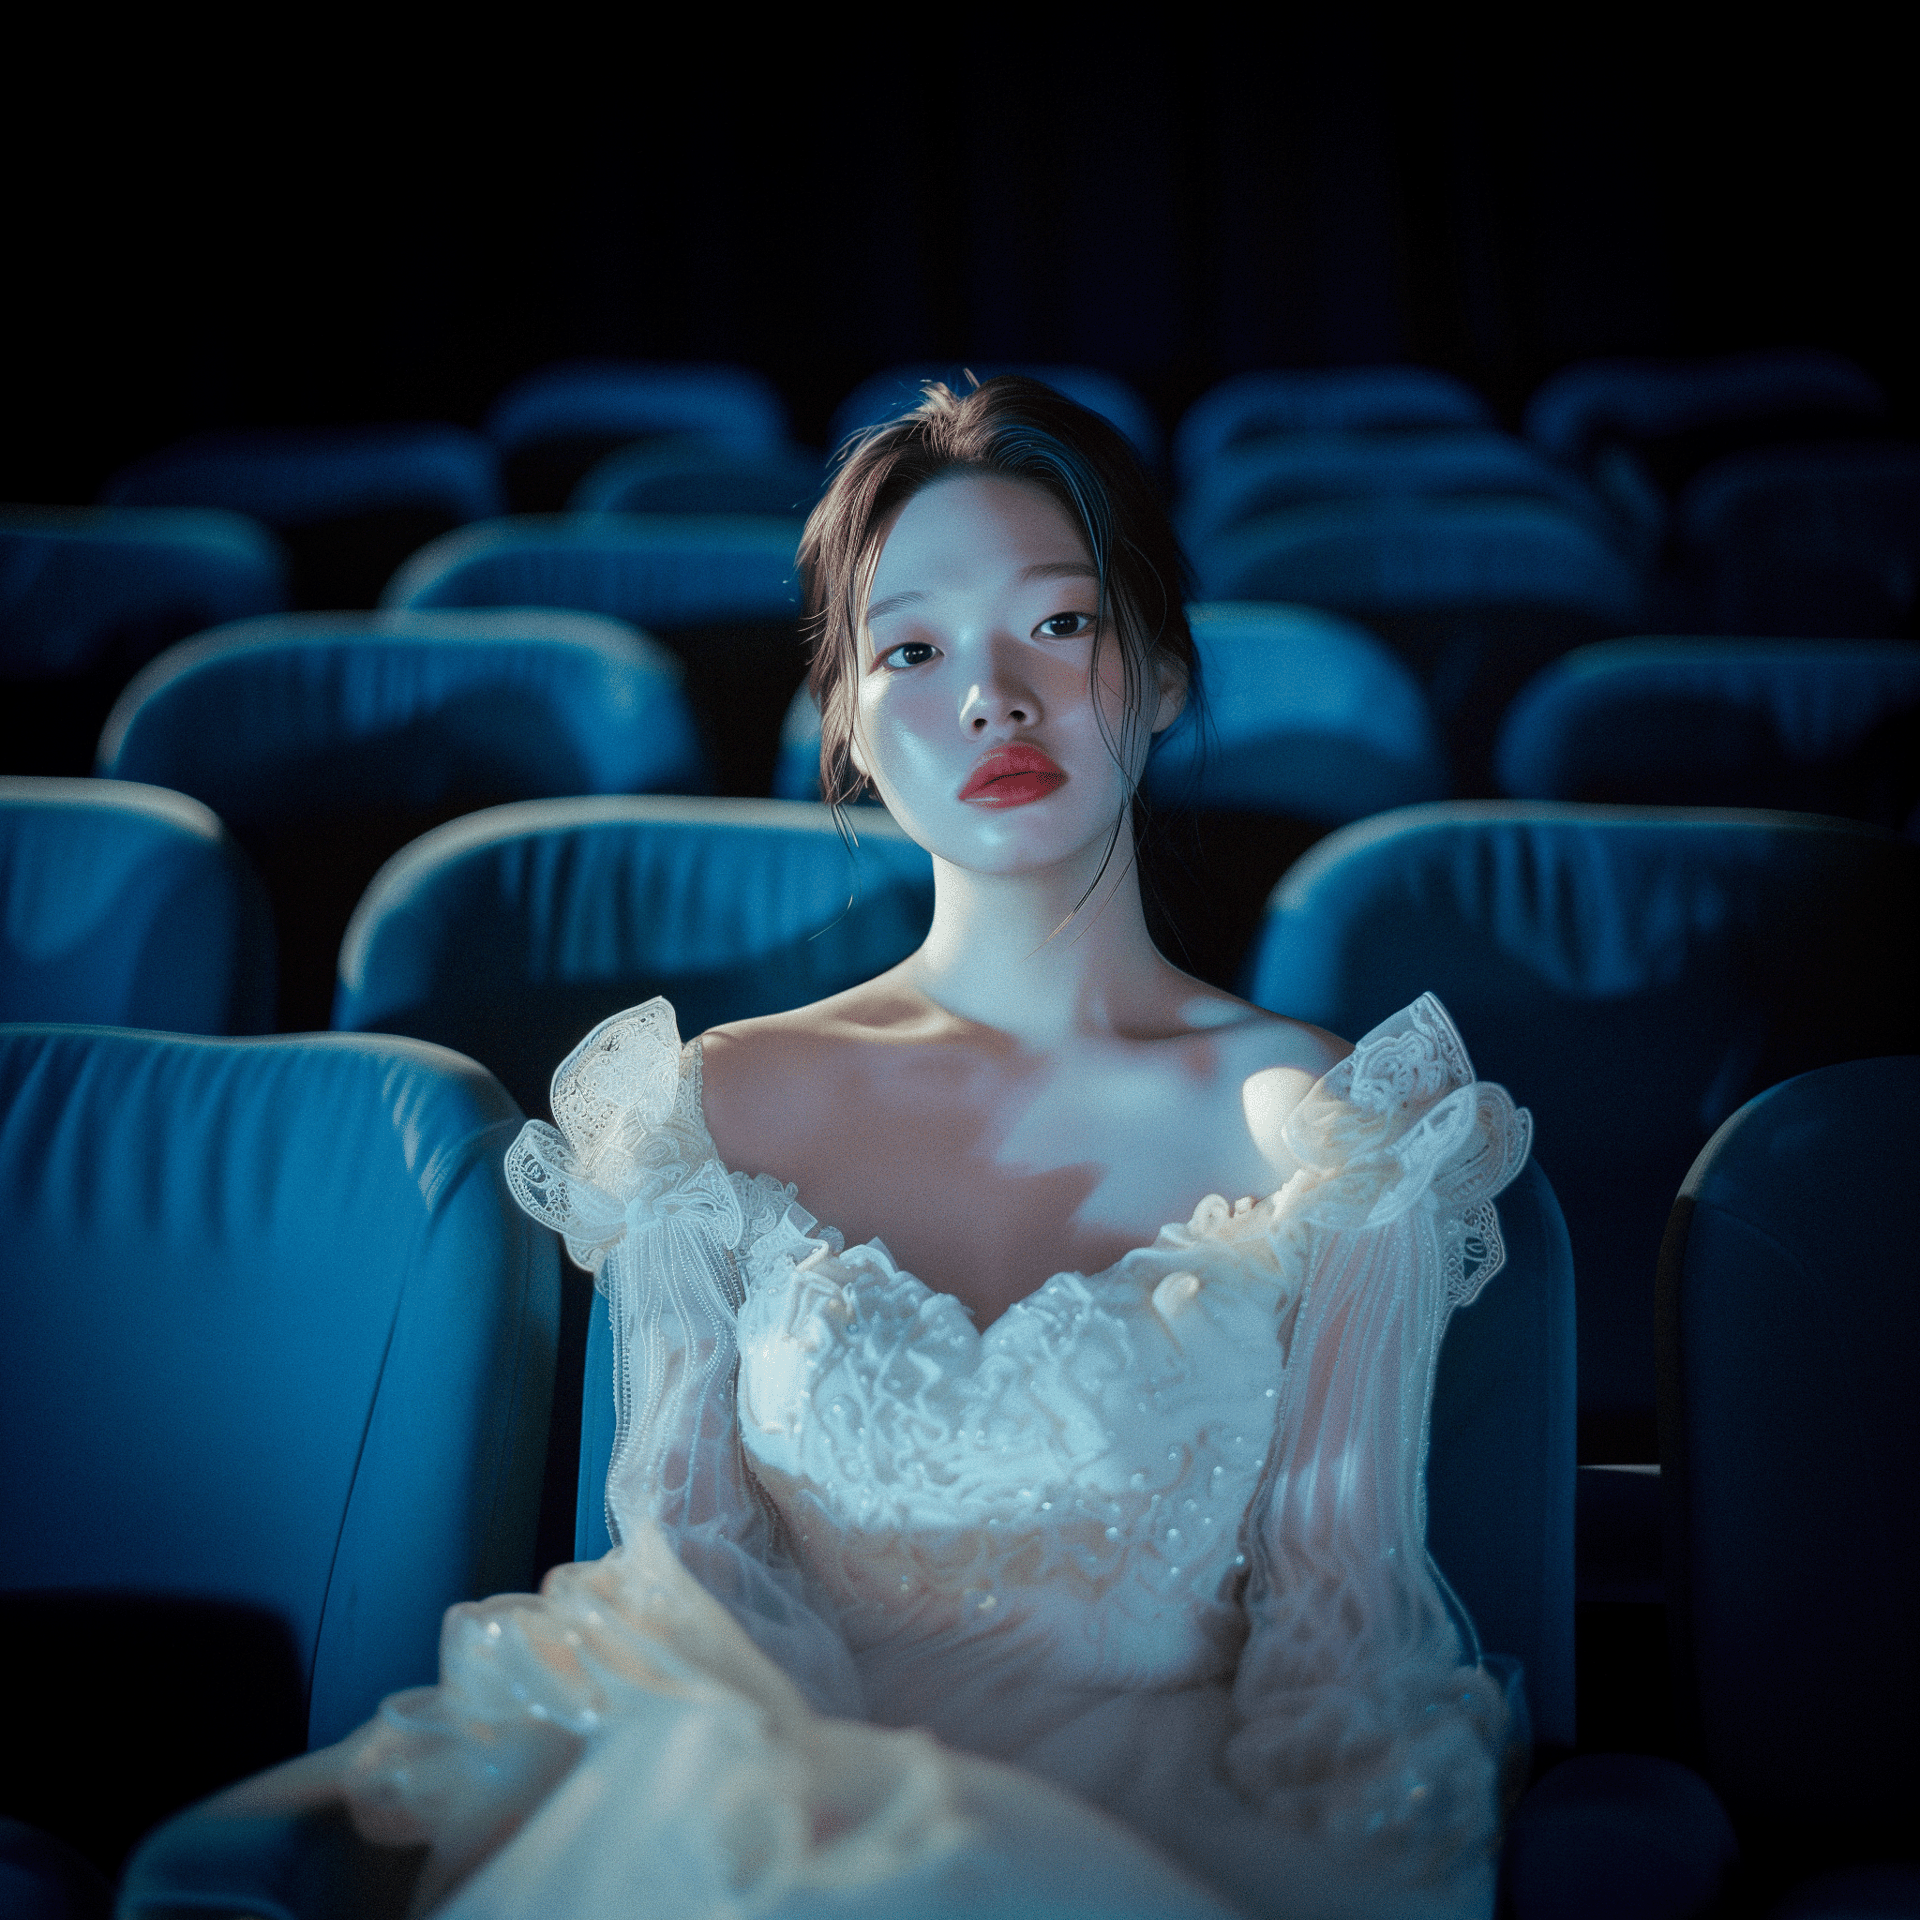 Una sposa seduta nel cinema vuoto